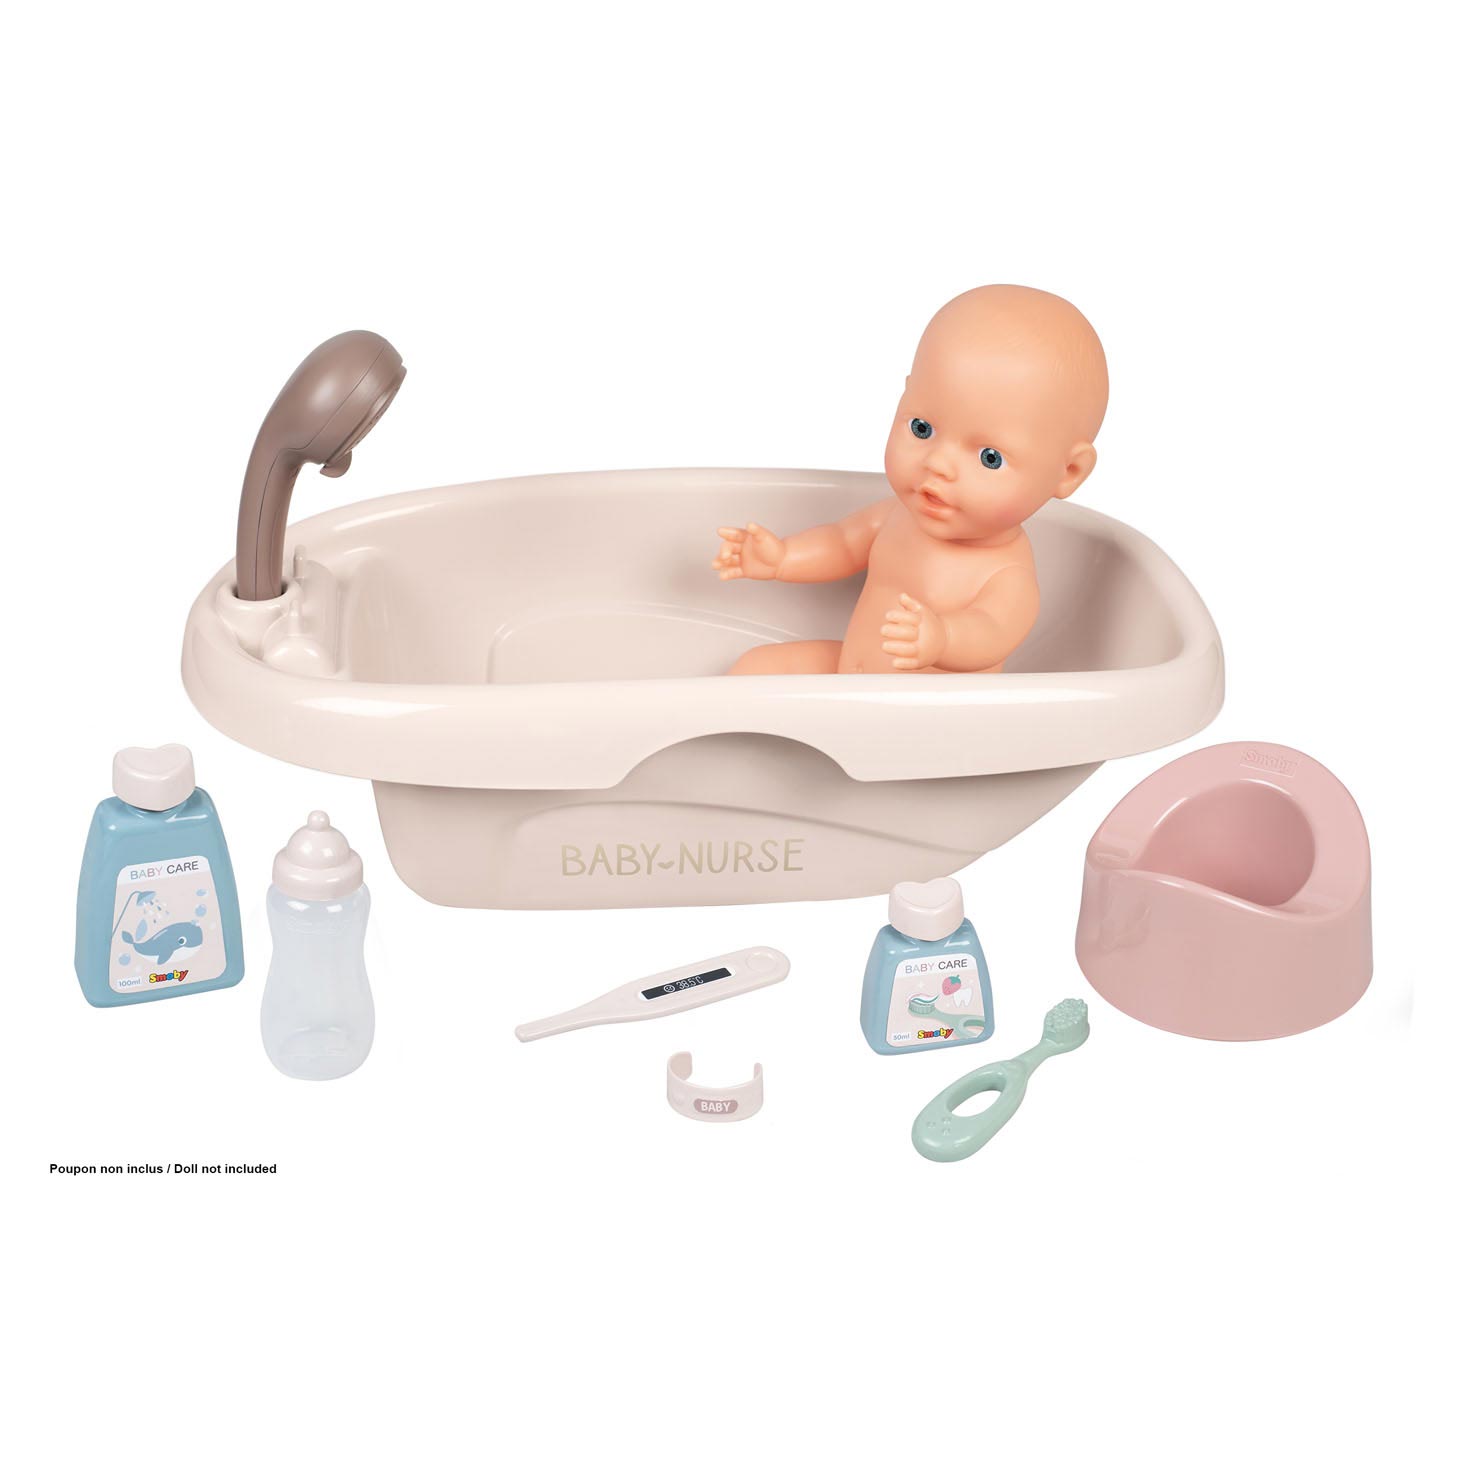 Smoby Baby Nurse Bath with Accessories, 8dlg.